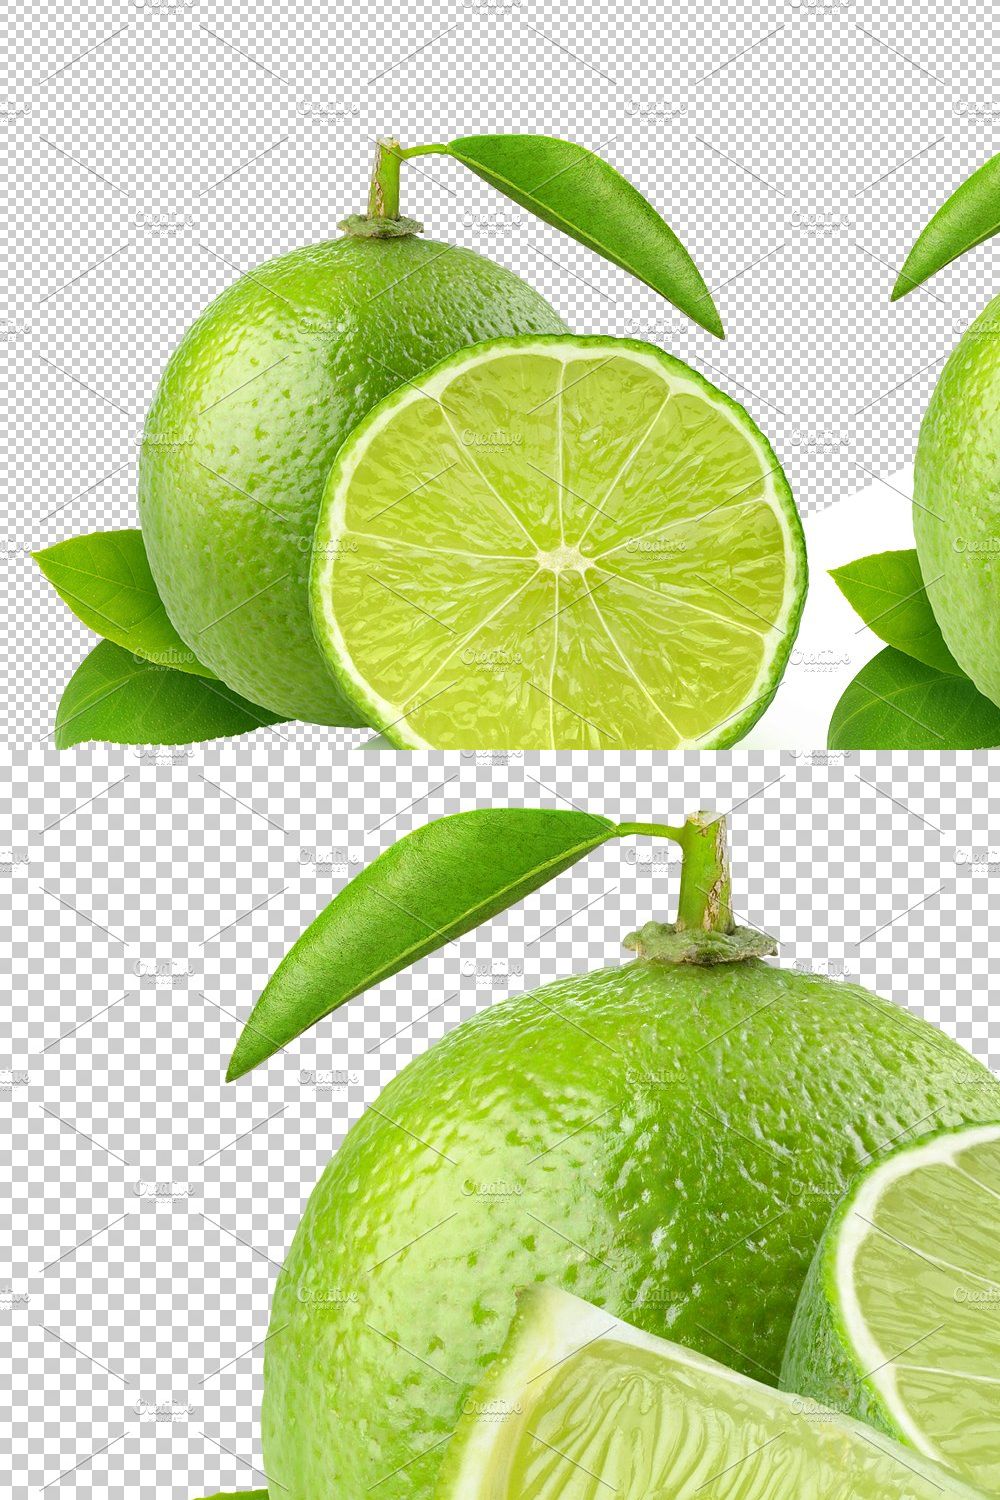 Cut limes pinterest preview image.